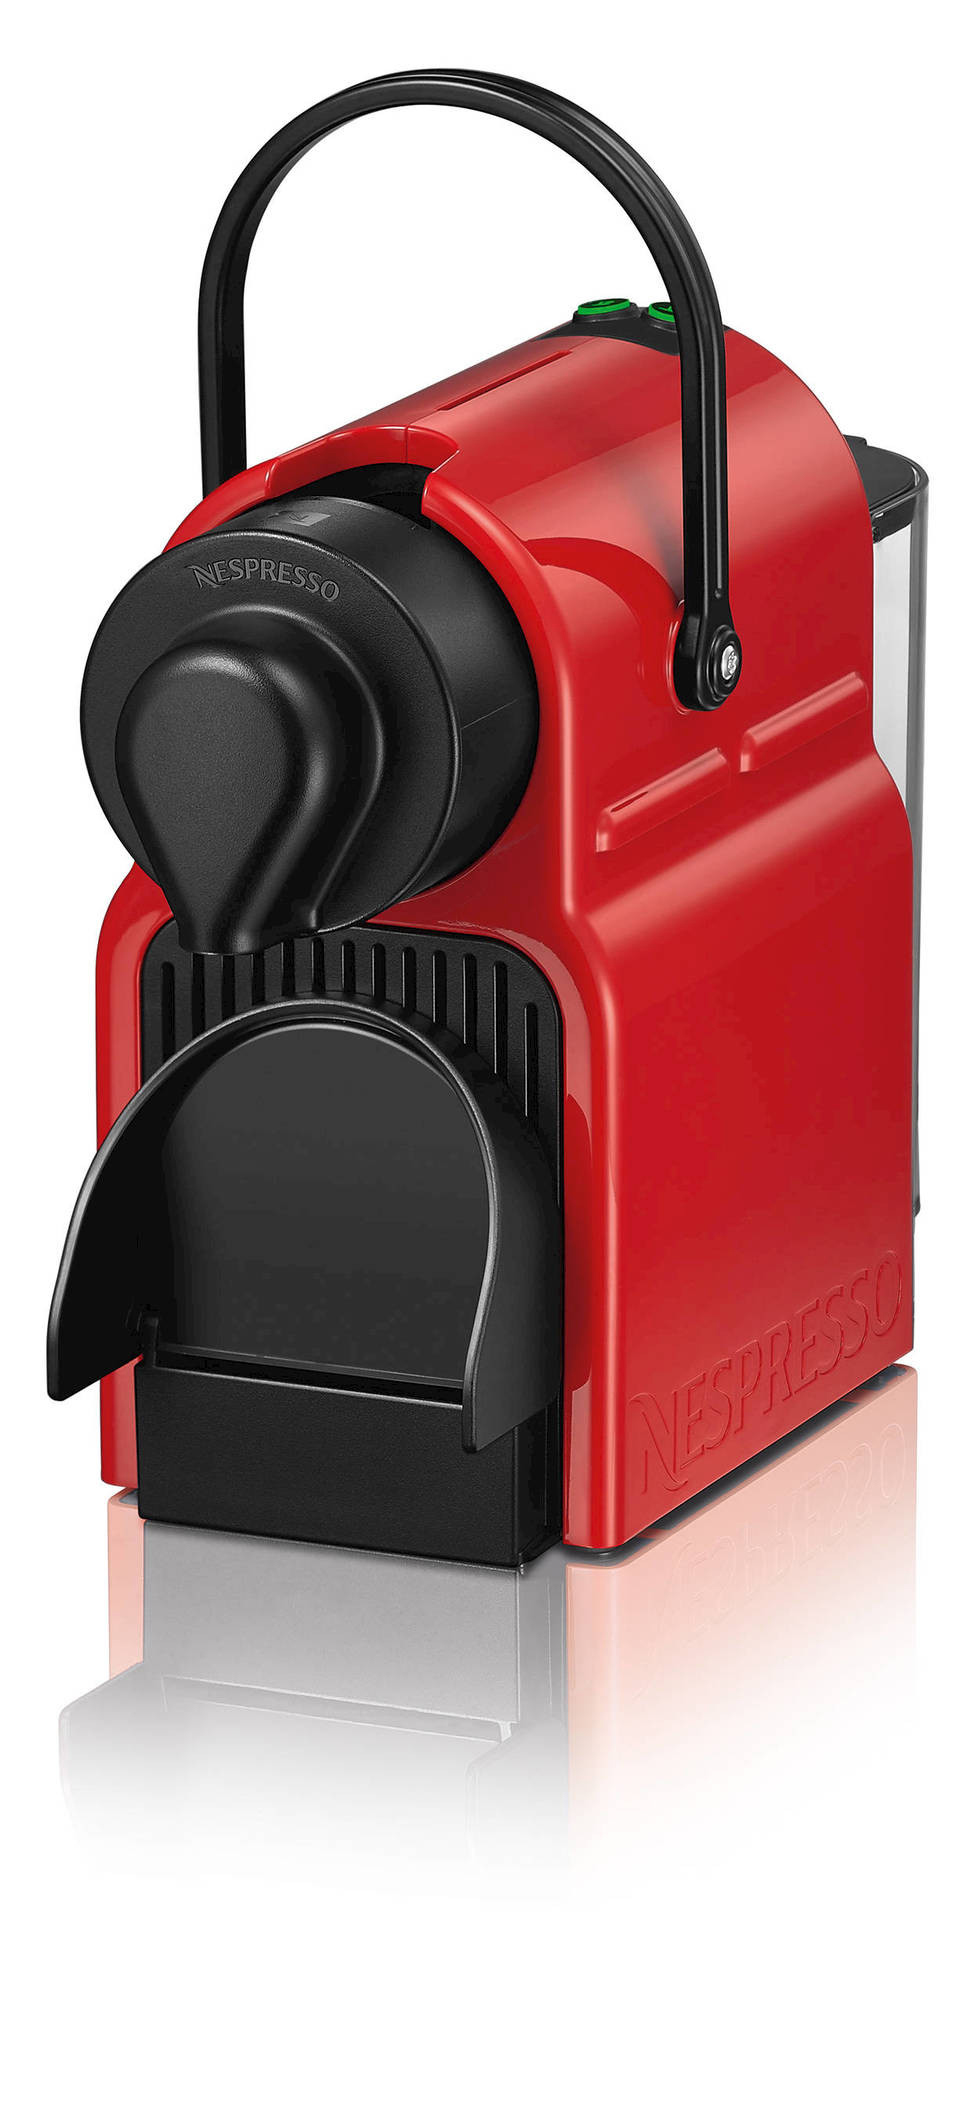 Inissia KRUPS XN1005 Ruby Nespresso Kapselmaschine Red